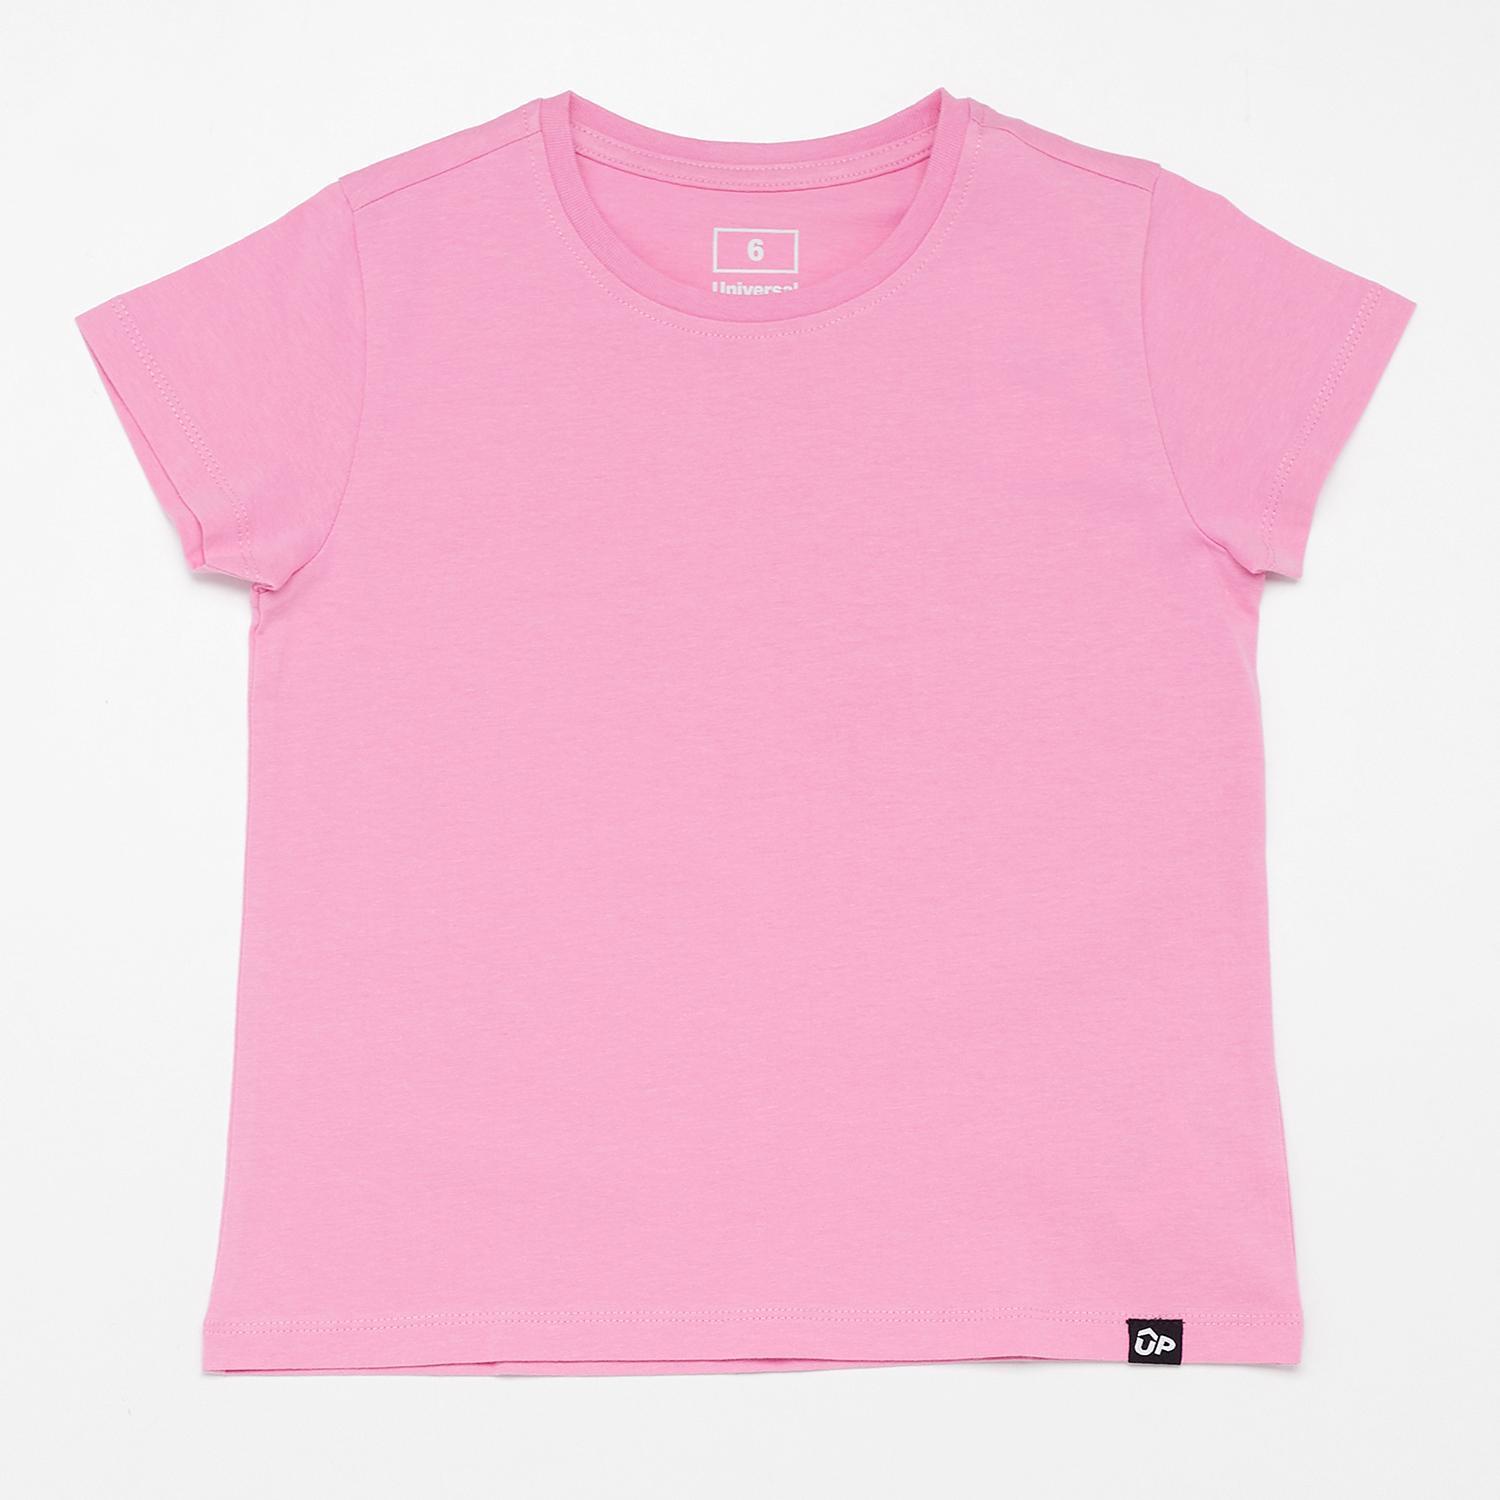 Up Basic 2 - Rosa - Camiseta Niña